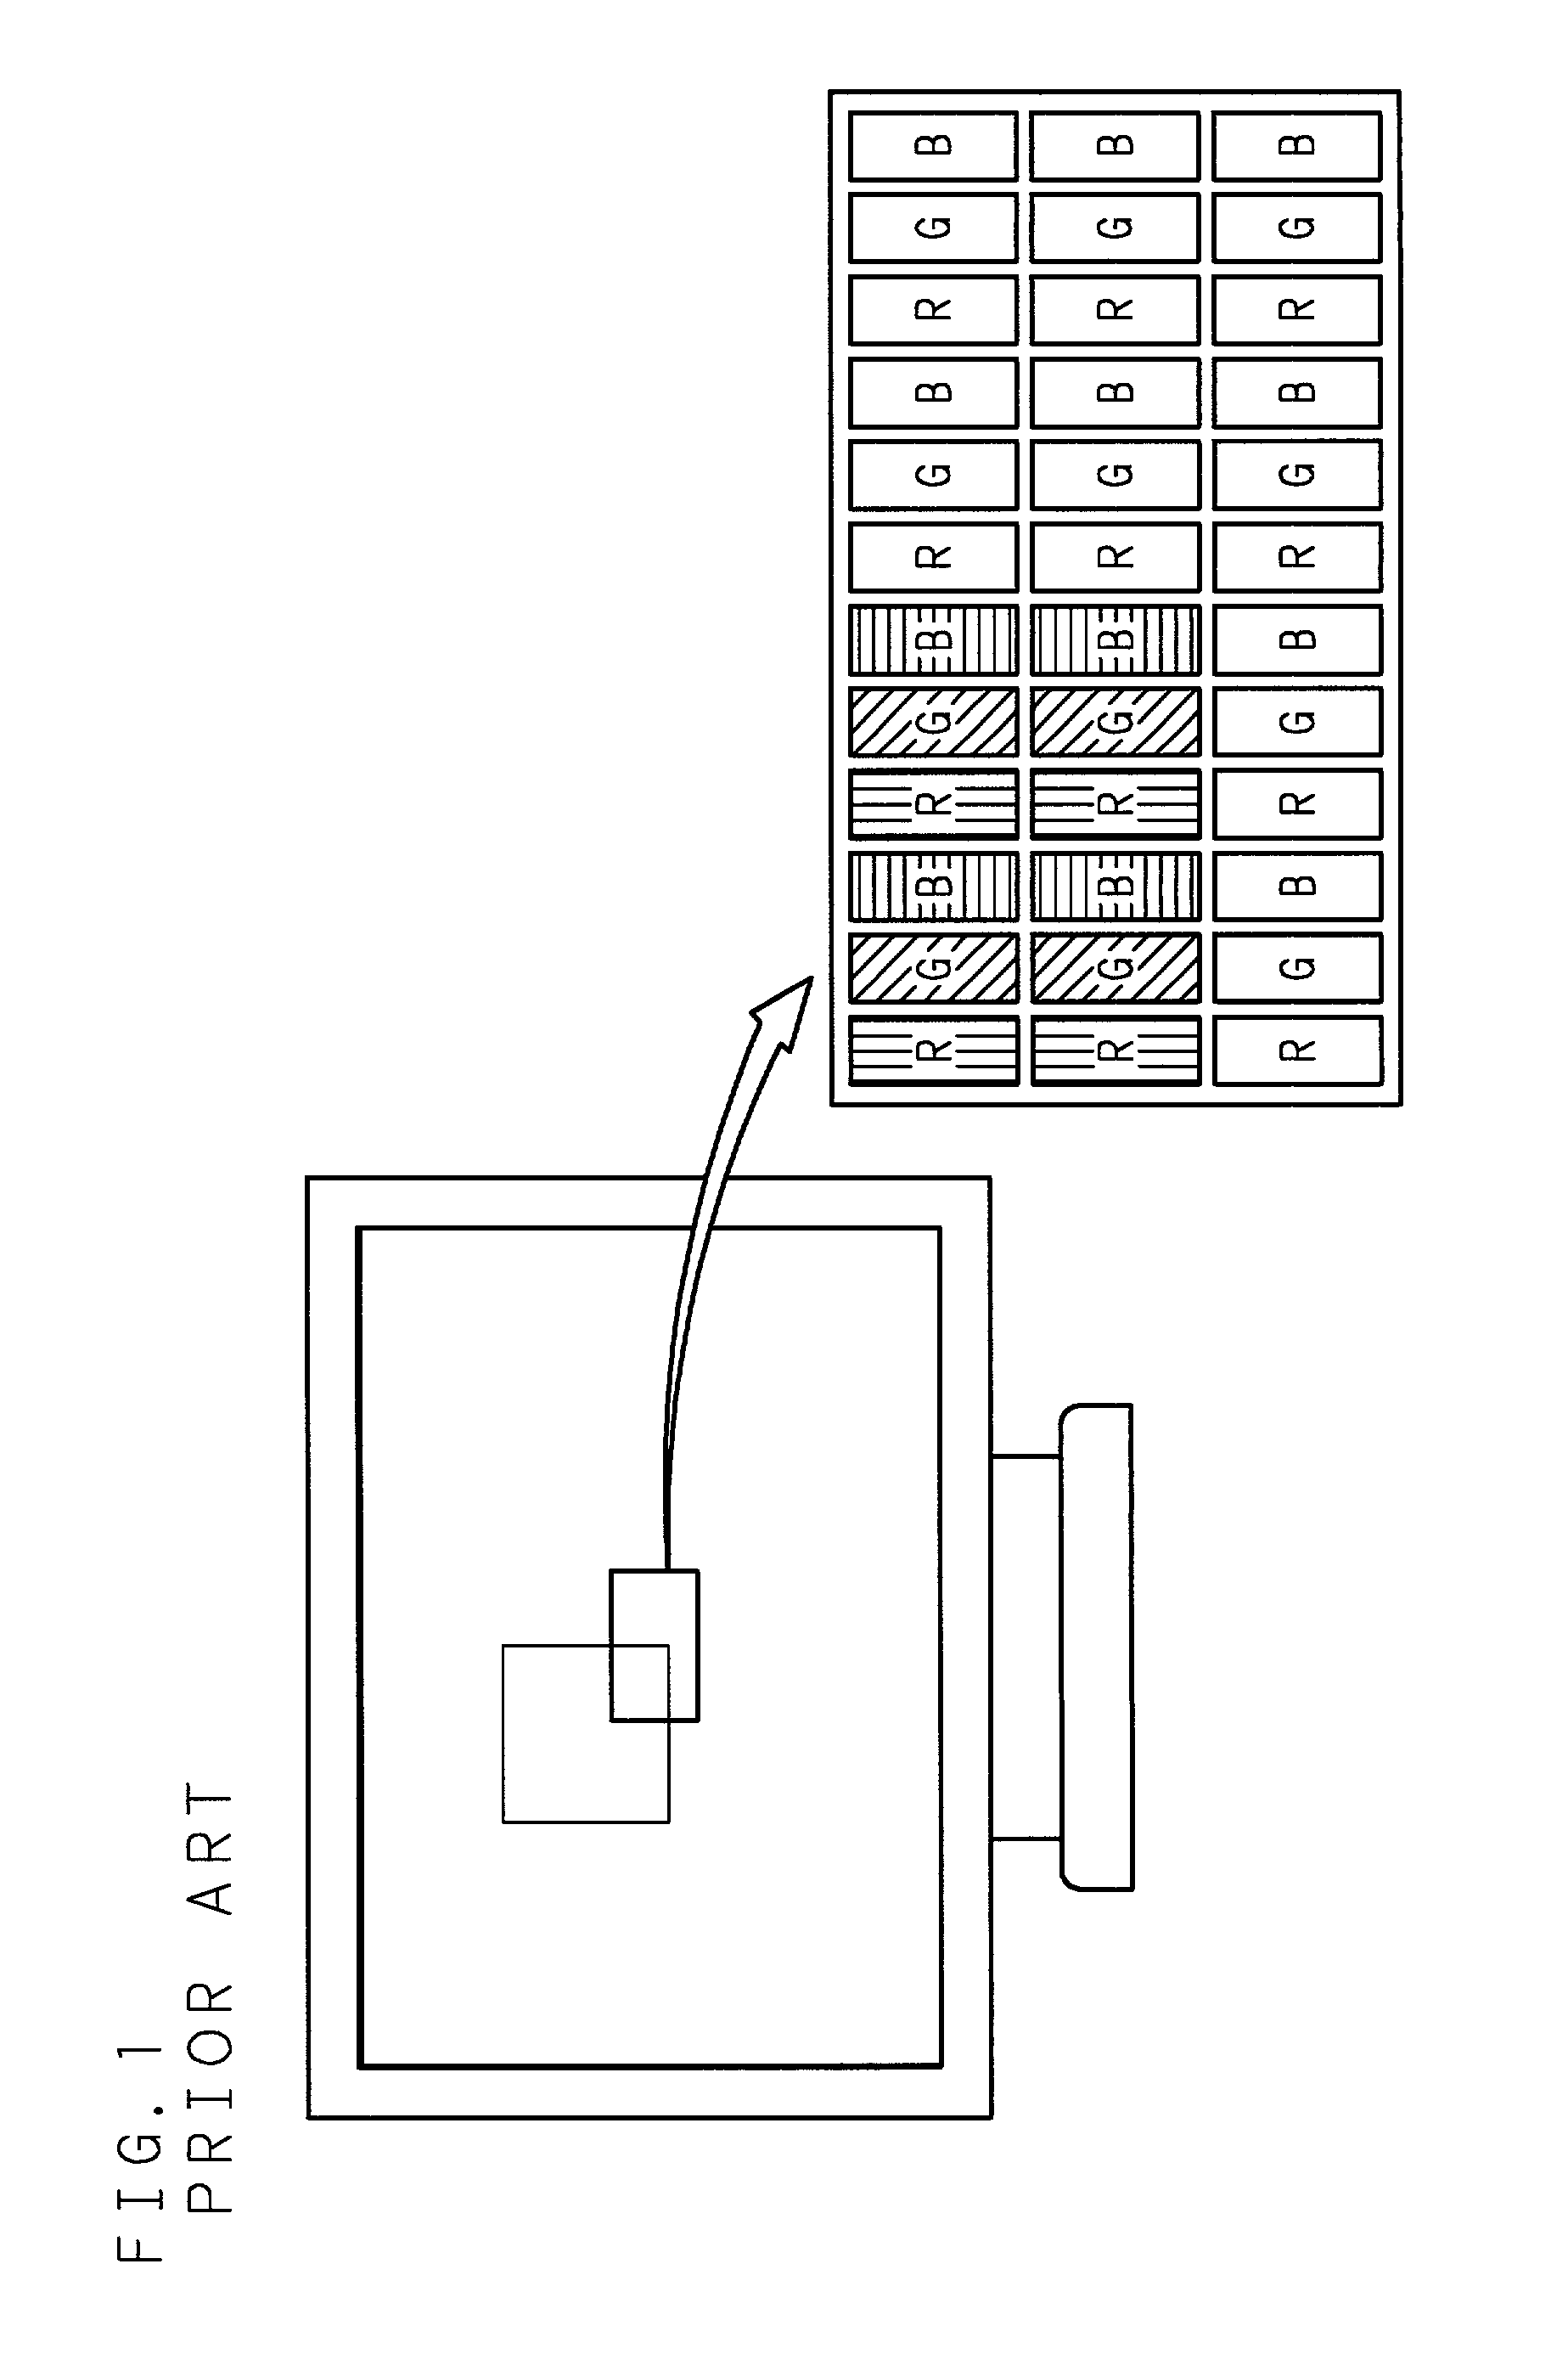 Liquid crystal display device and liquid crystal display method